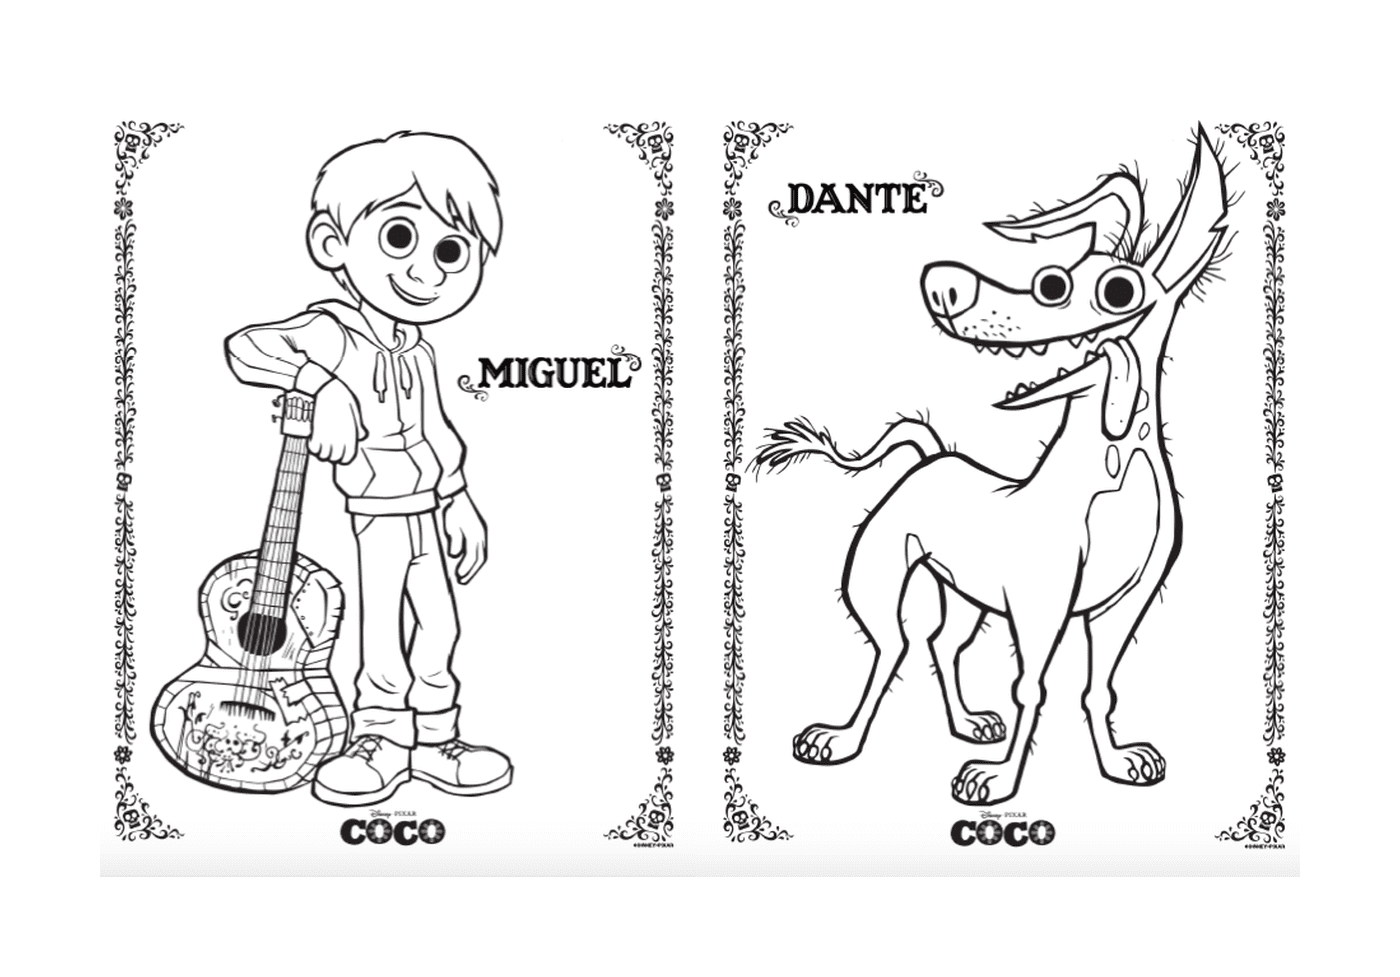   Miguel et Dante le chien, dans Coco de Disney Pixar 